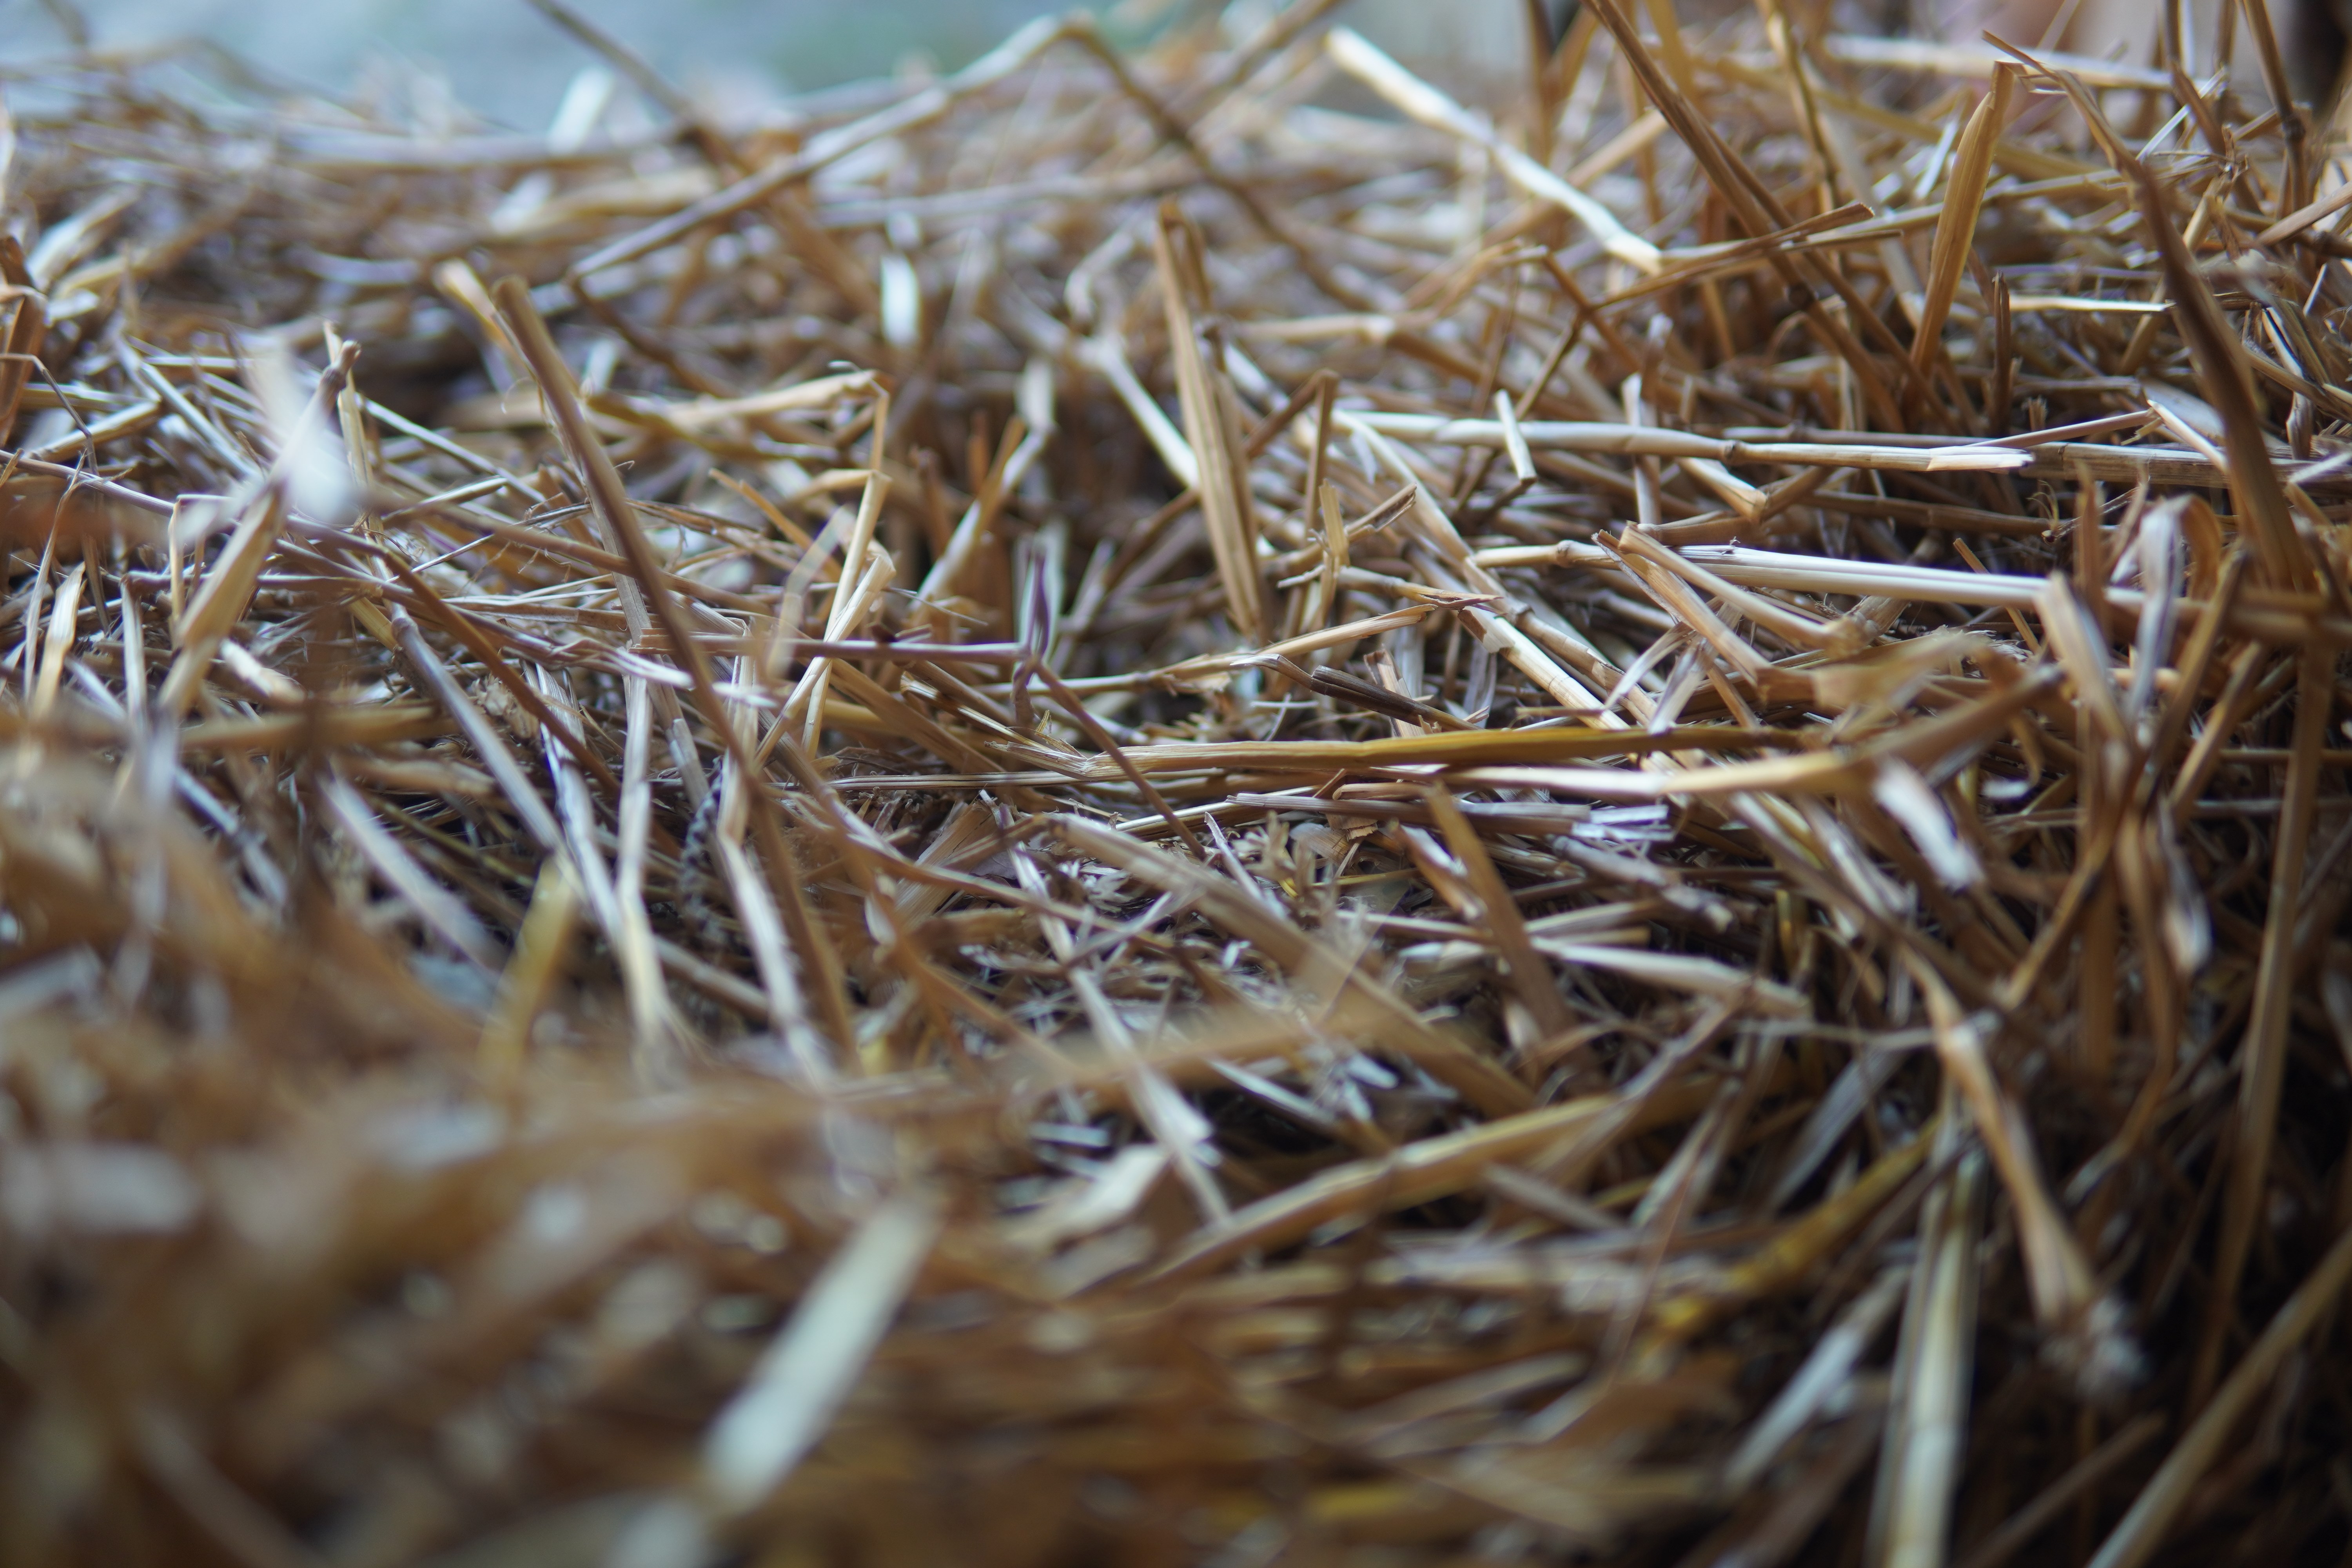 General 6000x4000 nature straw nests depth of field closeup